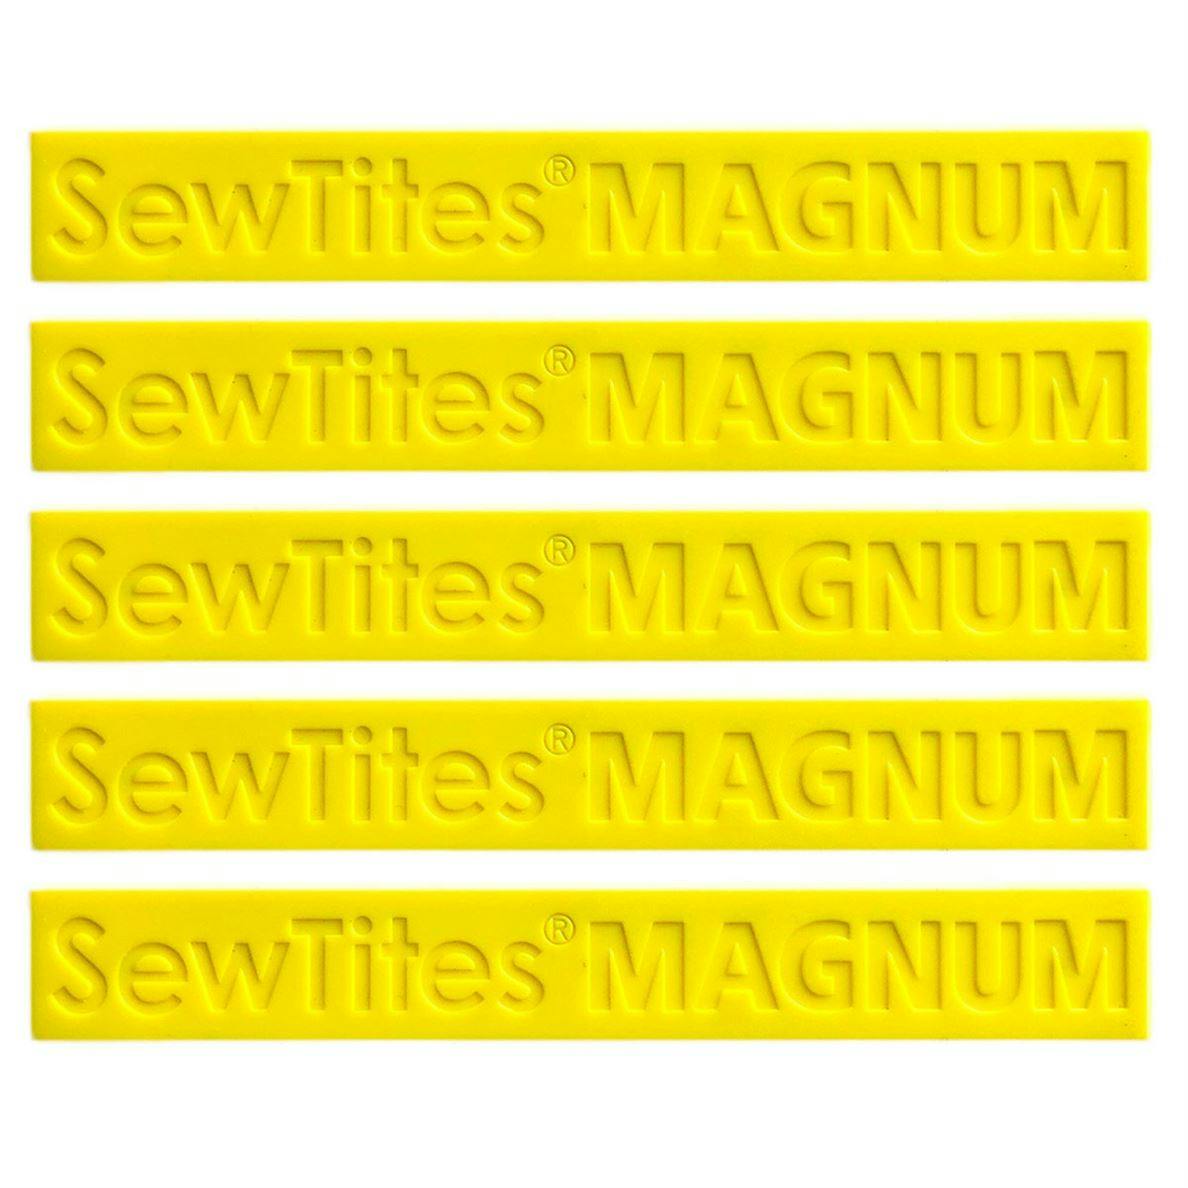 SewTItes Magnum strips